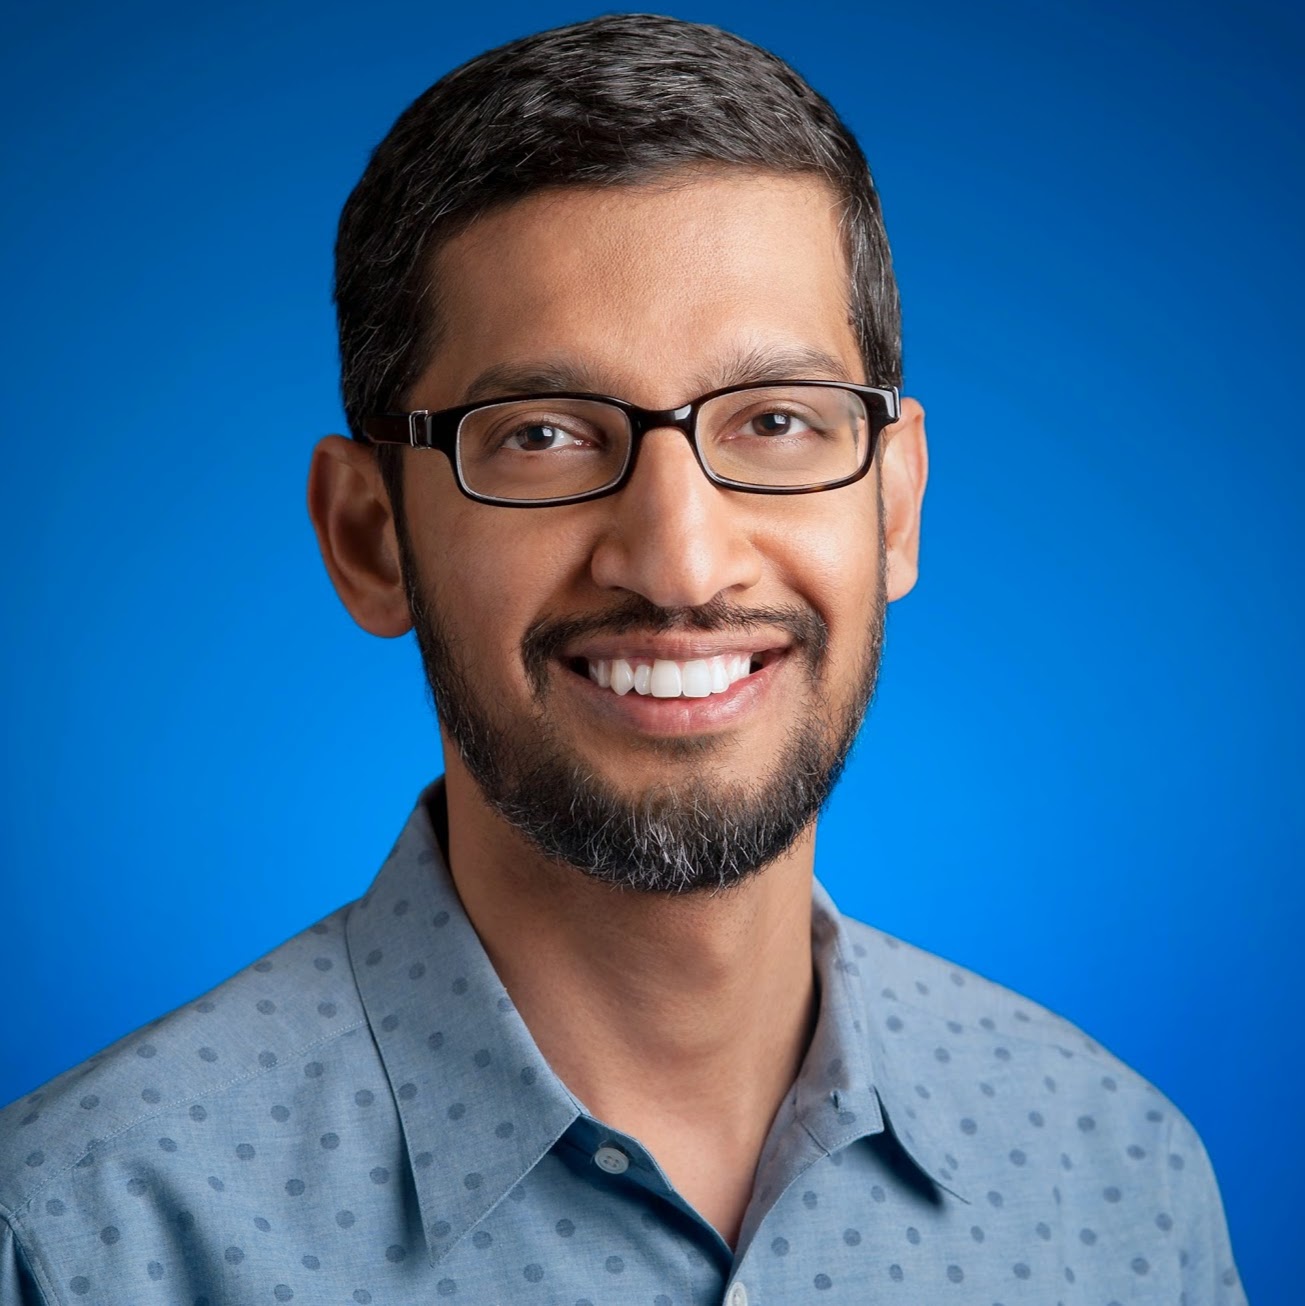 Google-Boss Sundar Pichai stellt kostenloses Android-Business-Modell in Frage